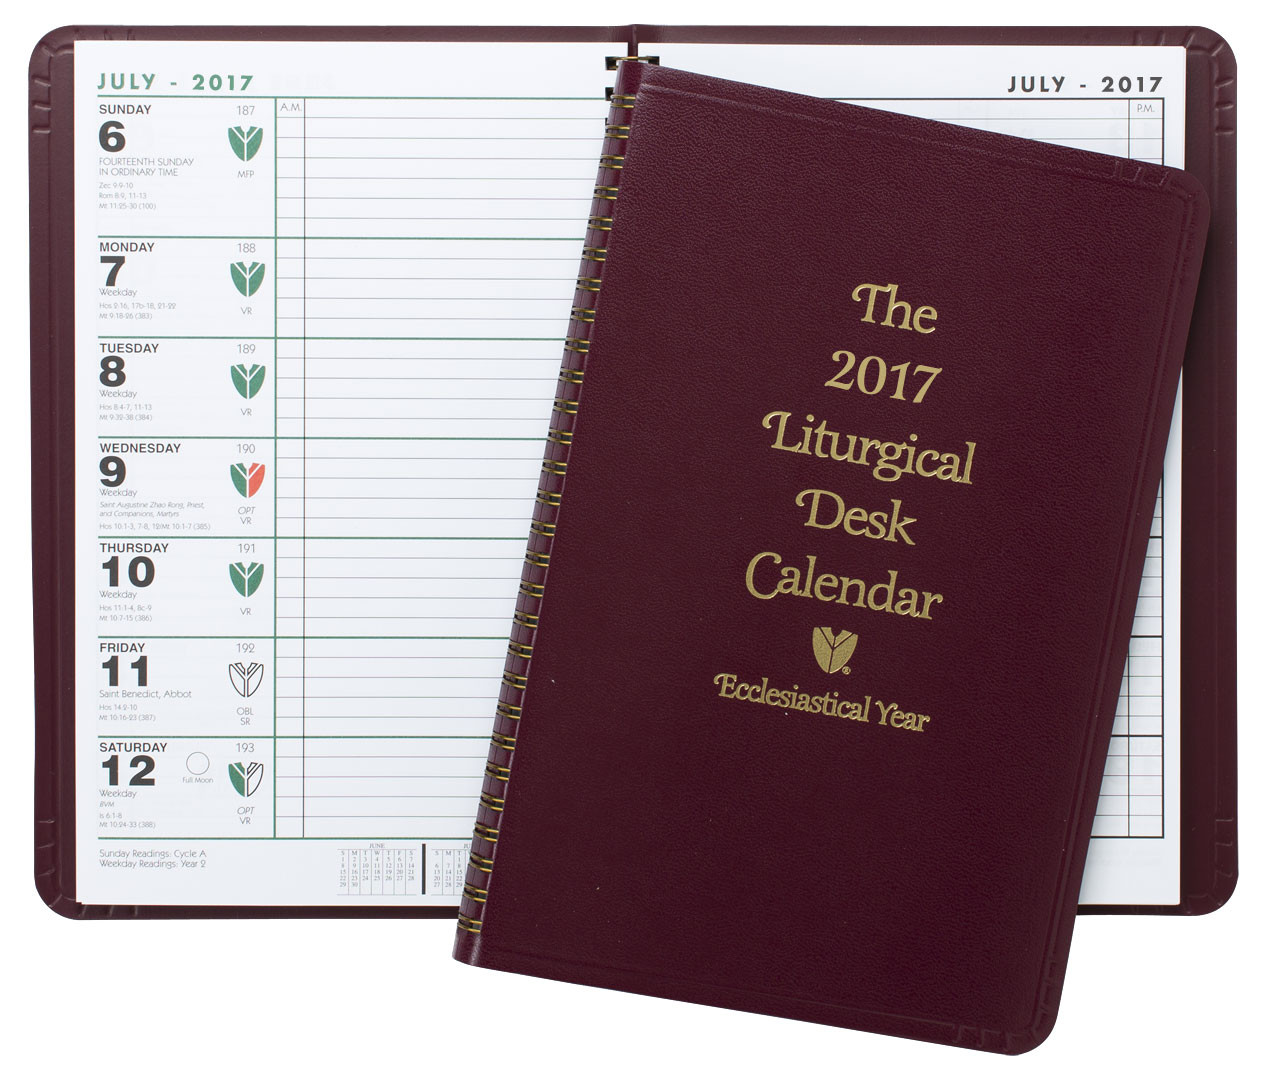 catholic-liturgical-desk-calendars-shop-st-jude-church-supplies